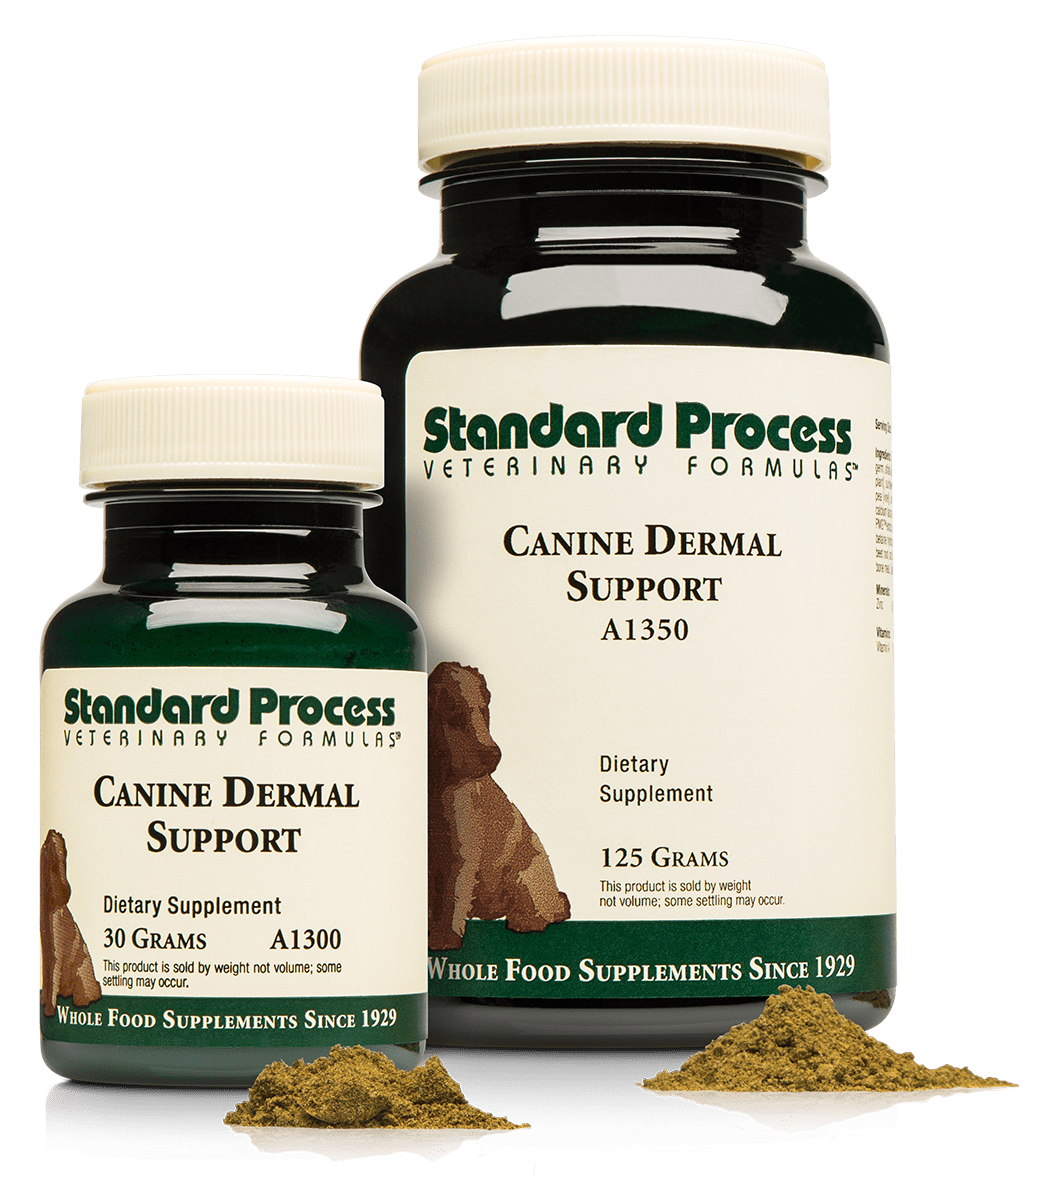 Standard Process Canine Dermal Support 30g powder